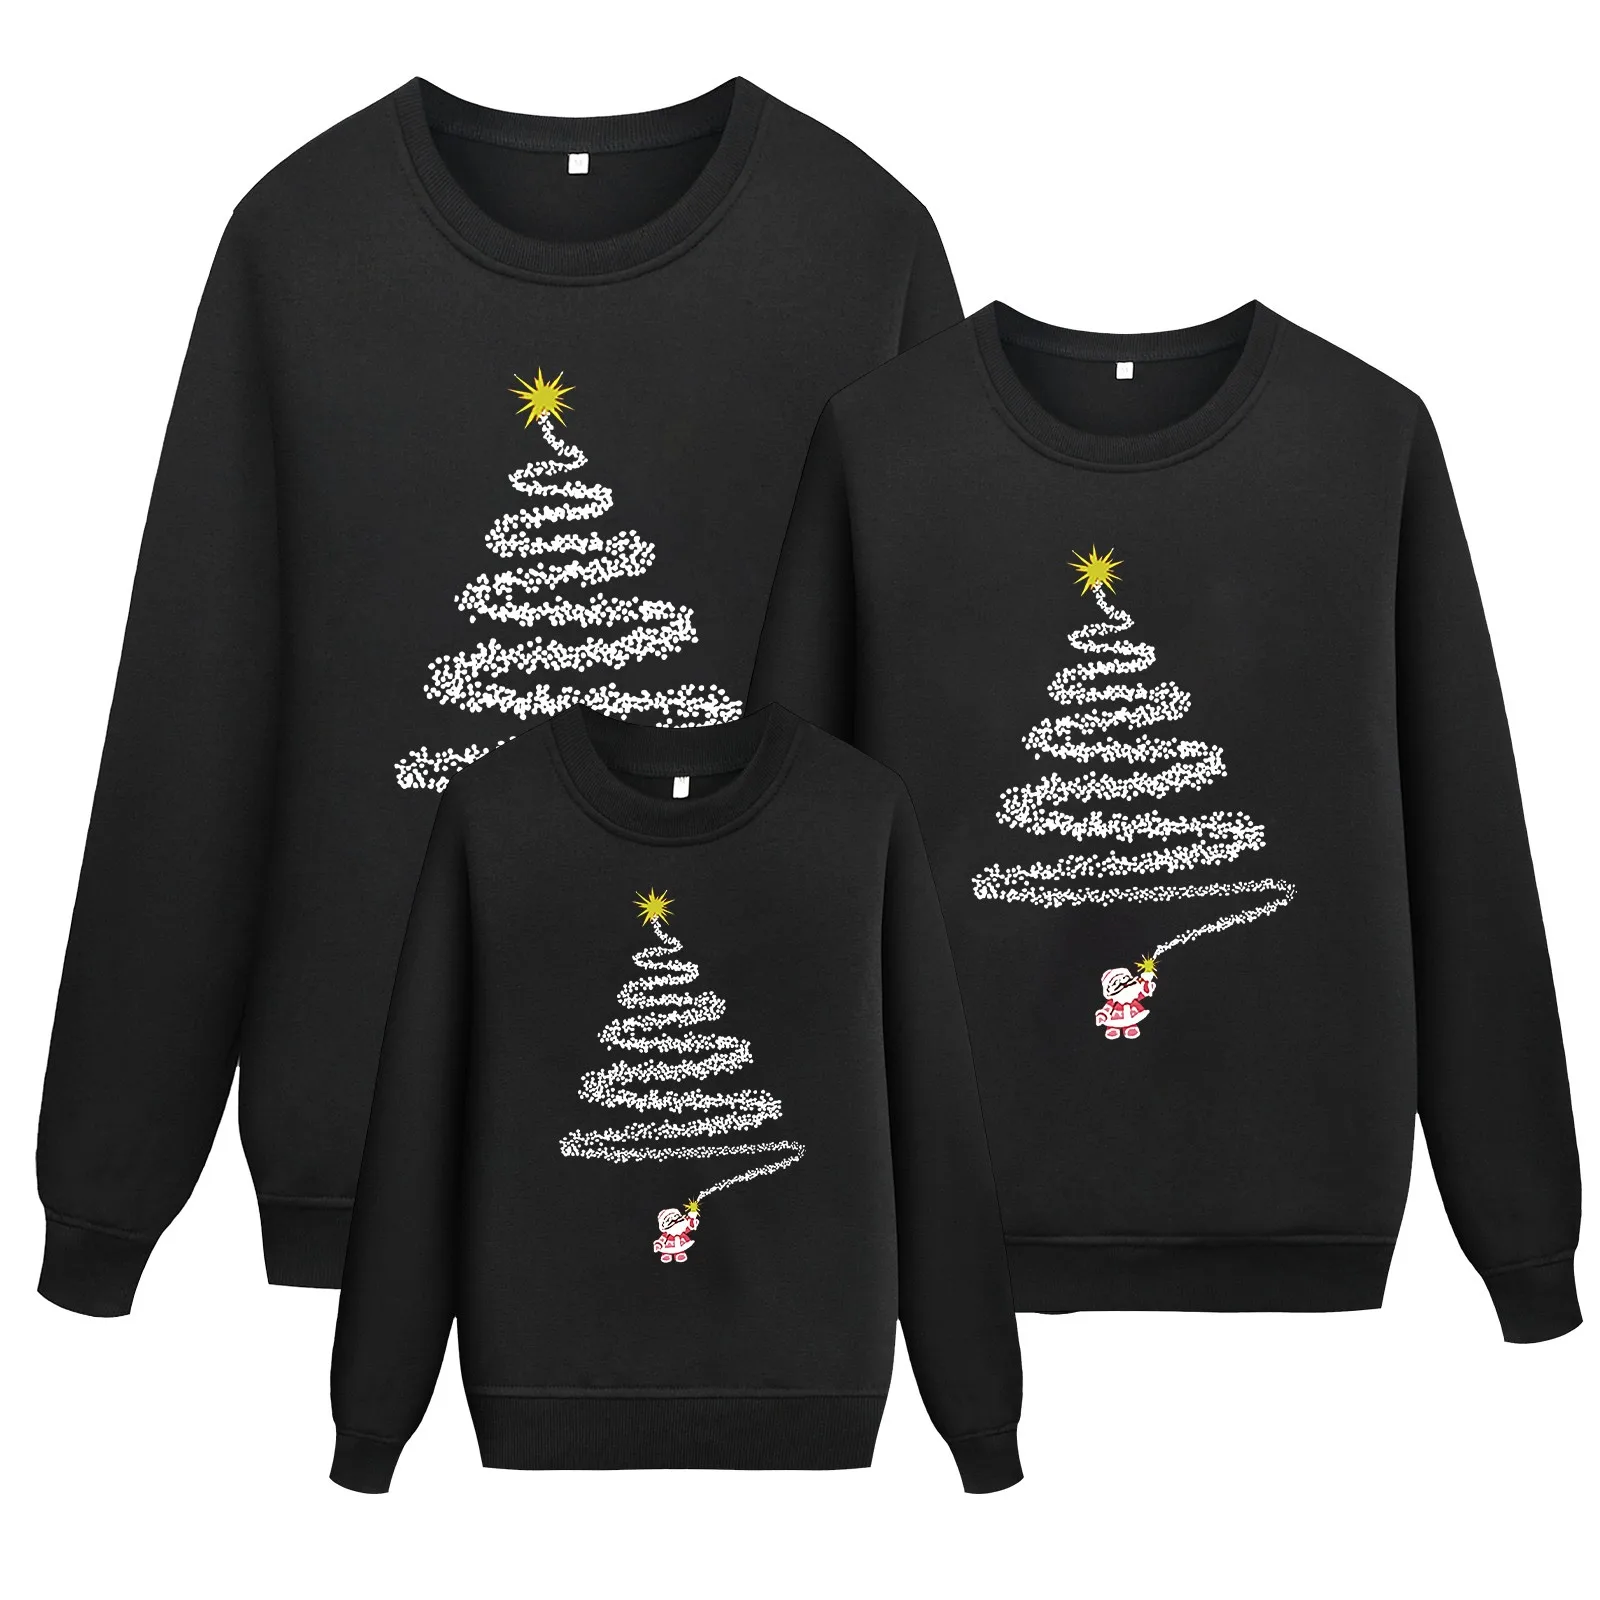 Lozeny Women Christmas Sweatshirts Dress Casual Long Sleeve Christmas Graphic Tunic Tops Shirts with Pockets 